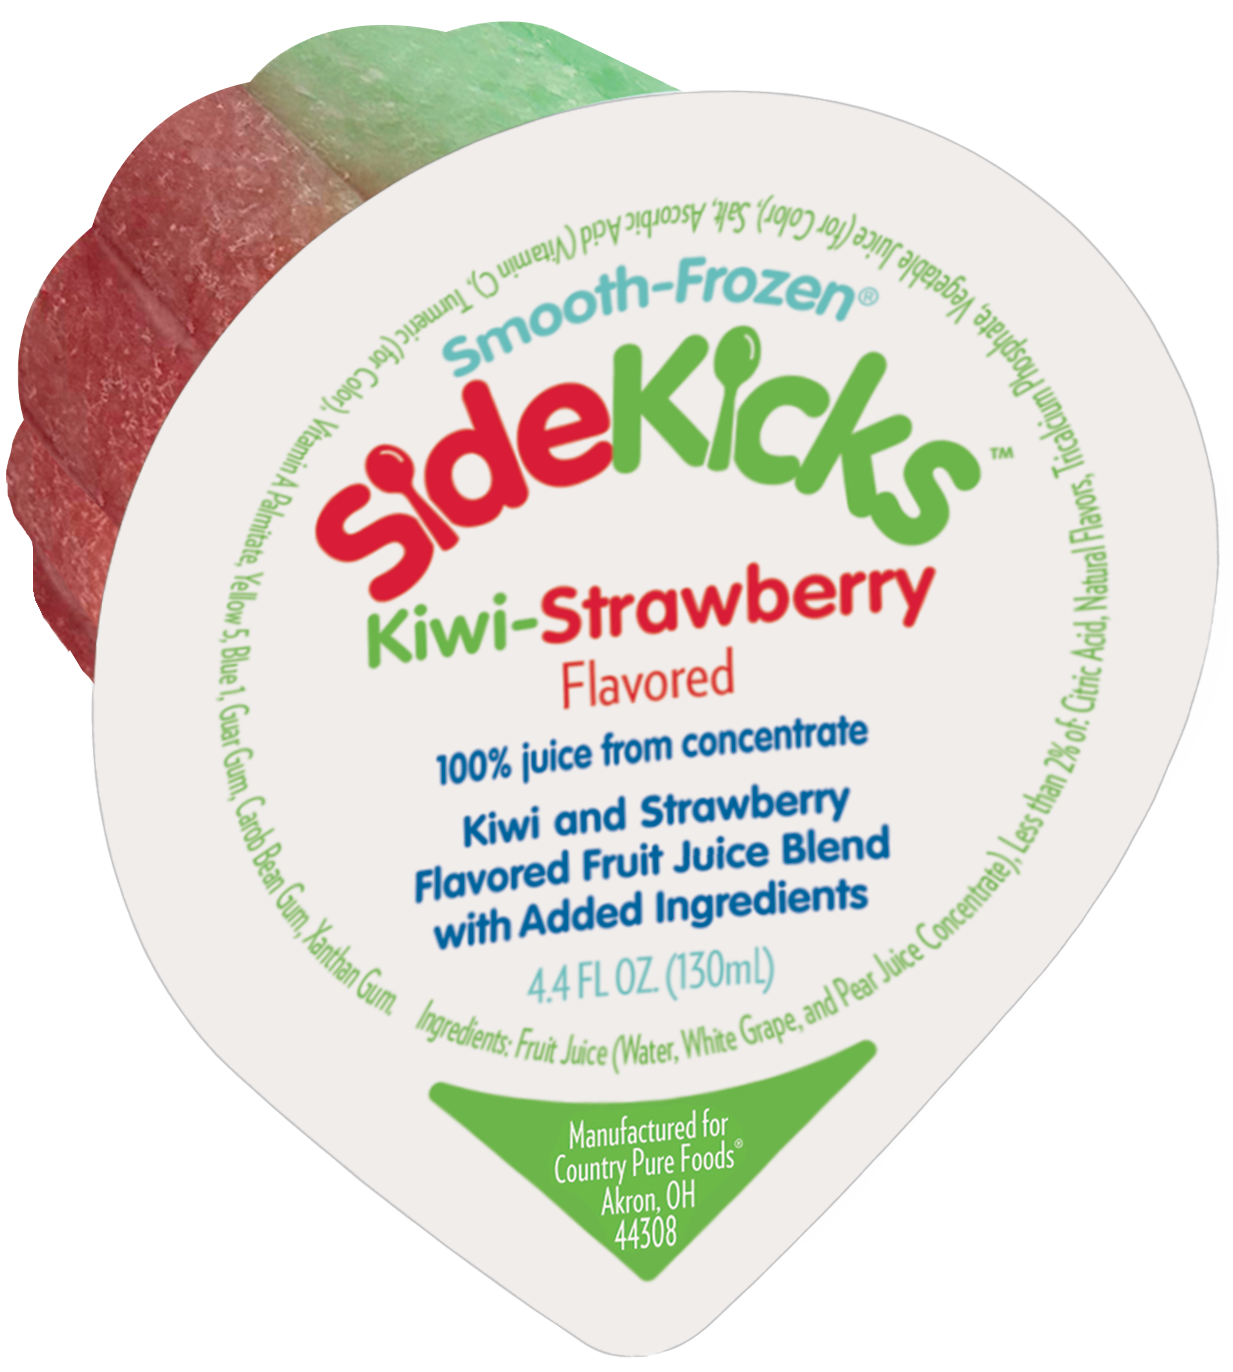 Smooth-Frozen SideKicks Kiwi-Strawberry